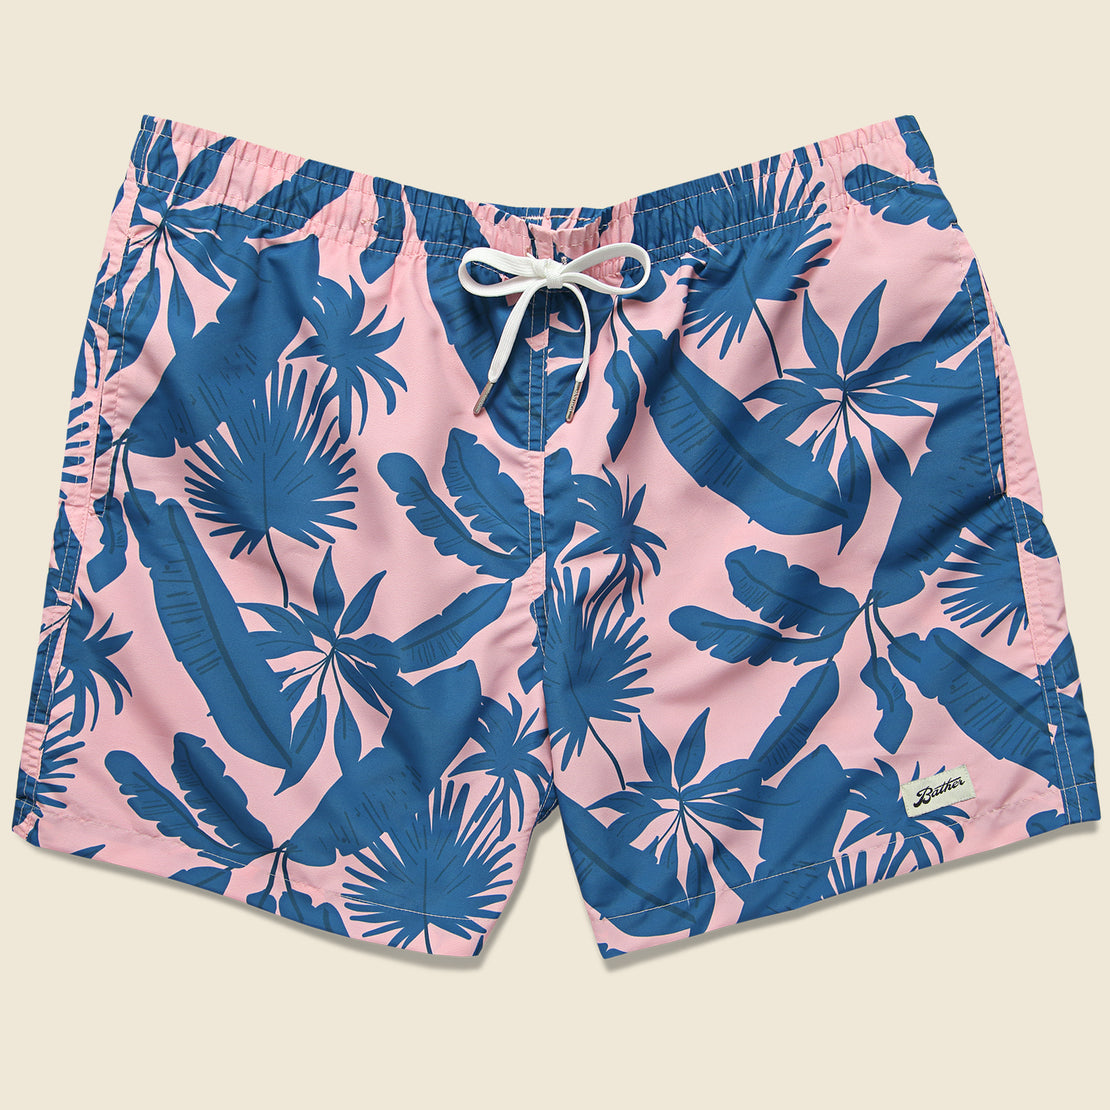 Bather Trunk Co. Tropical Palms Swim Trunk - Pink/Blue